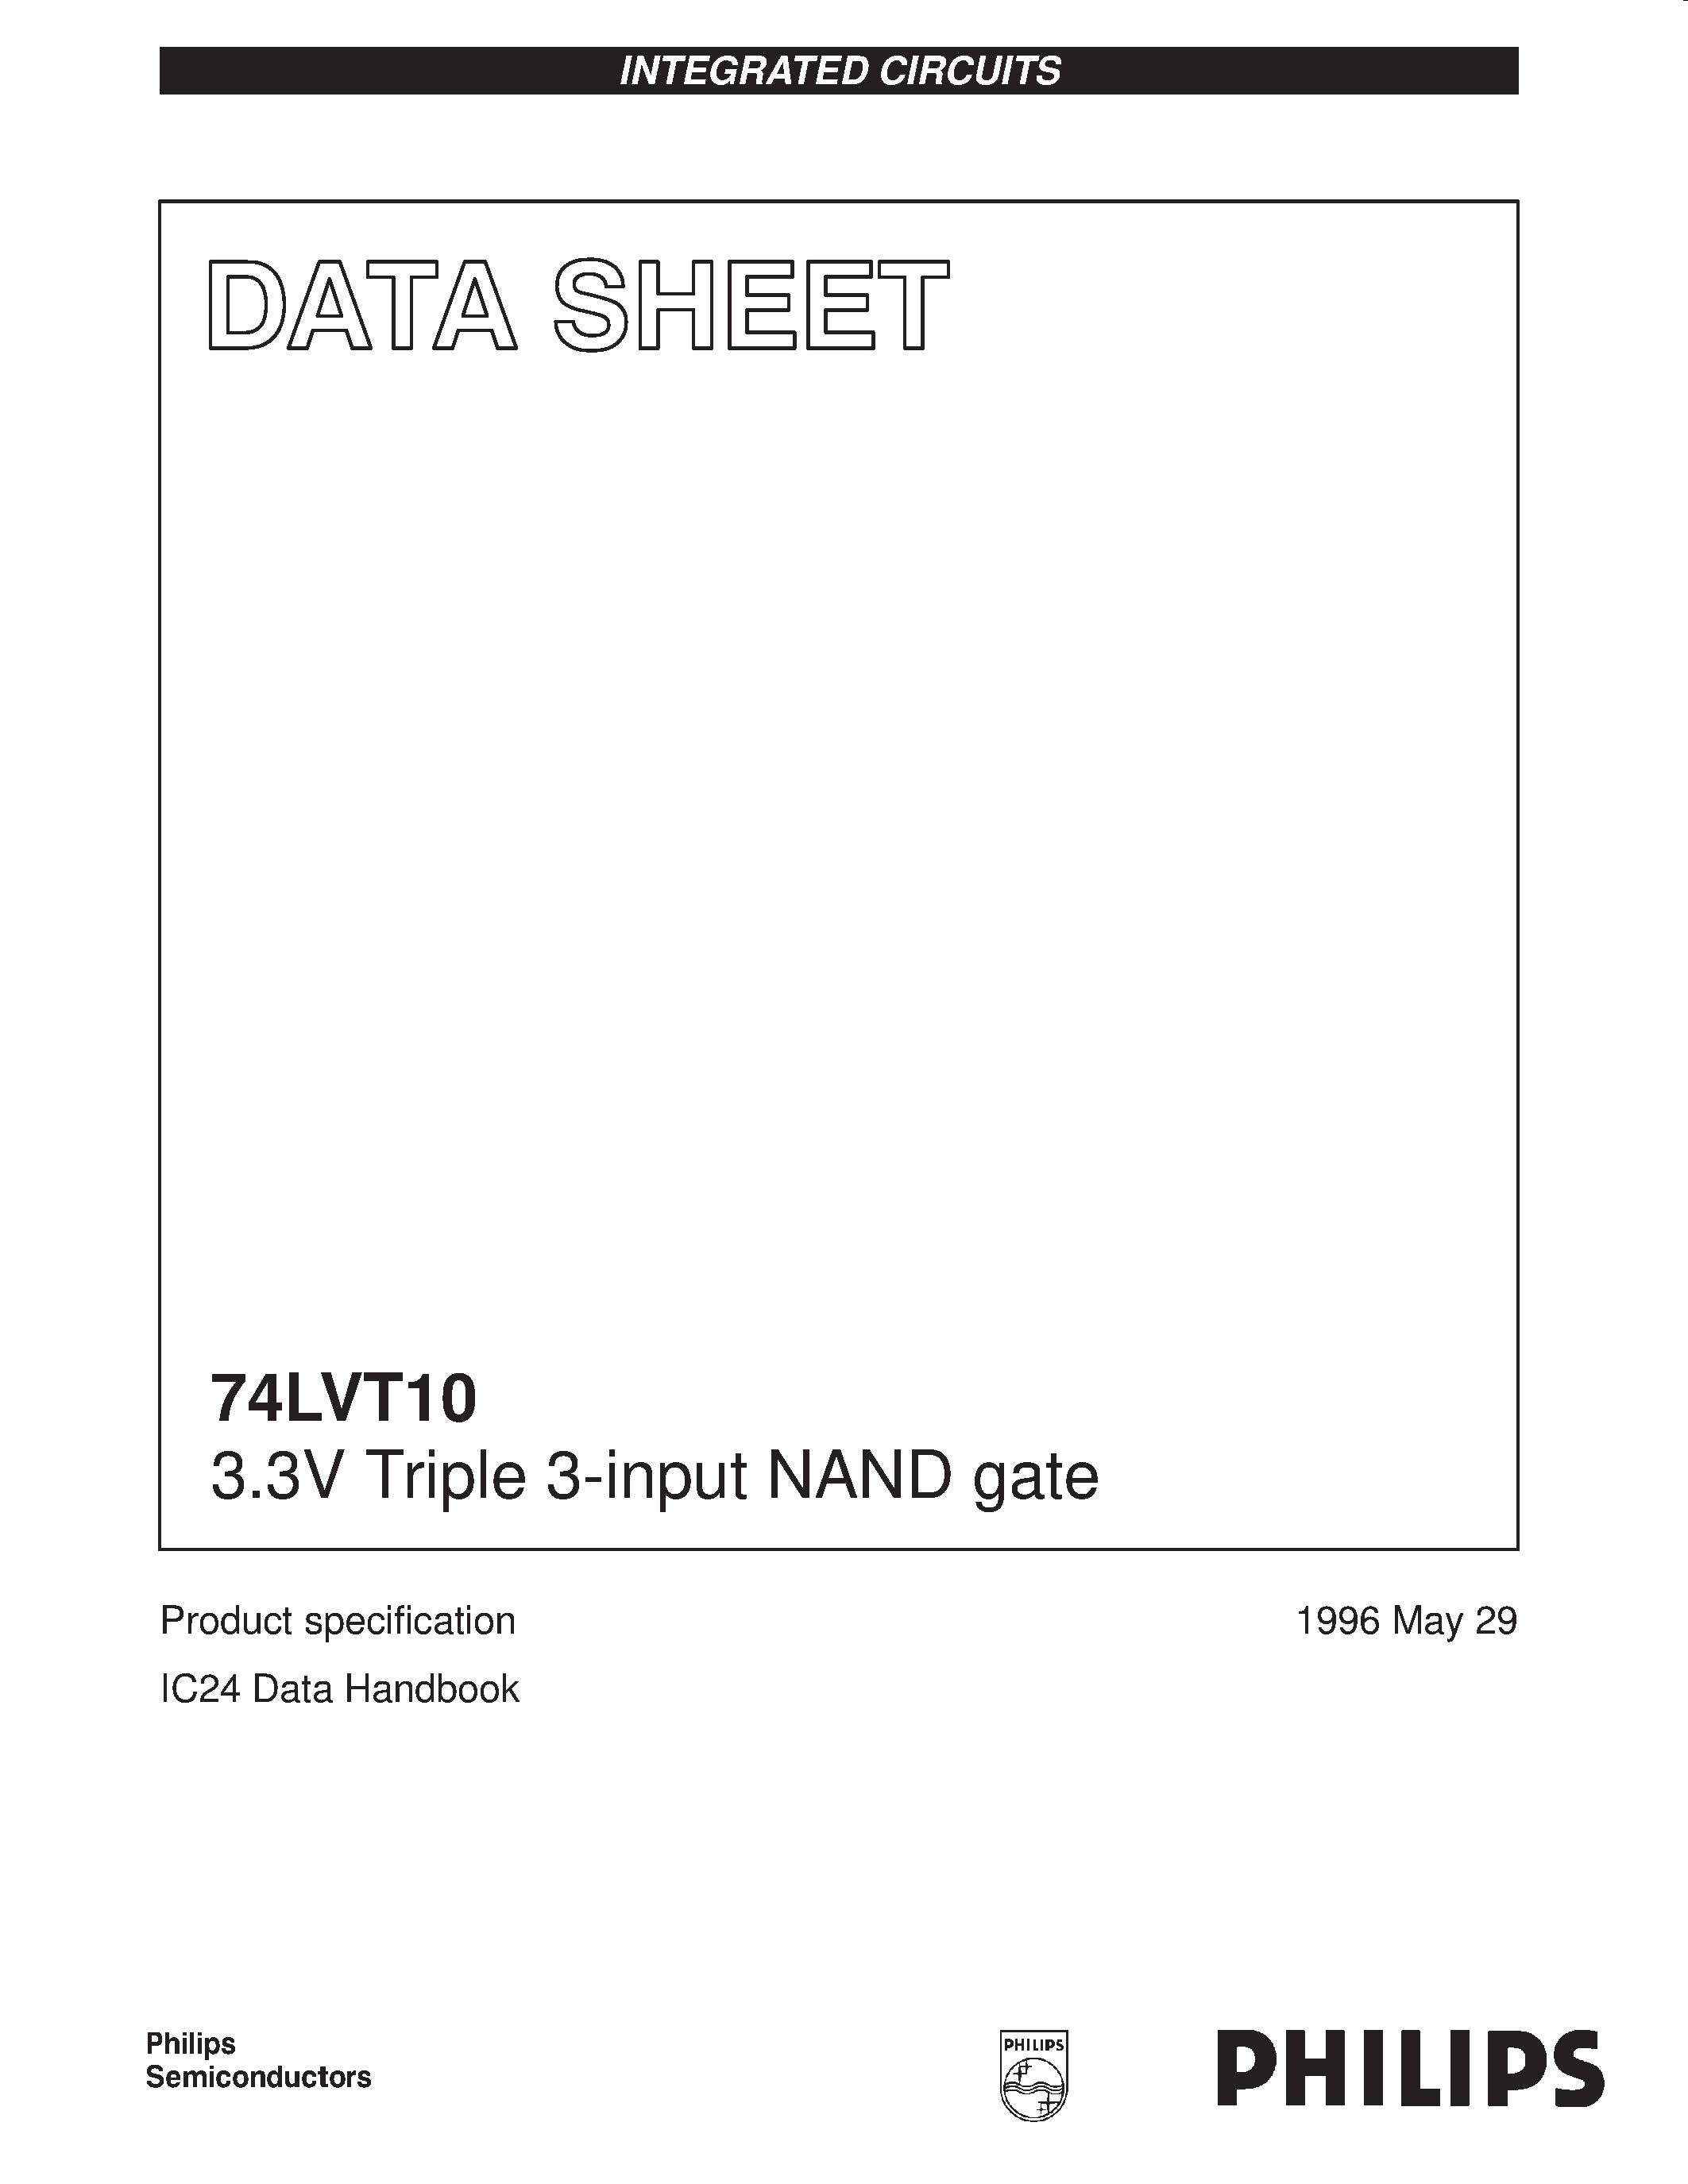 Datasheet 74LVT10 - 3.3V Triple 3-input NAND gate page 1